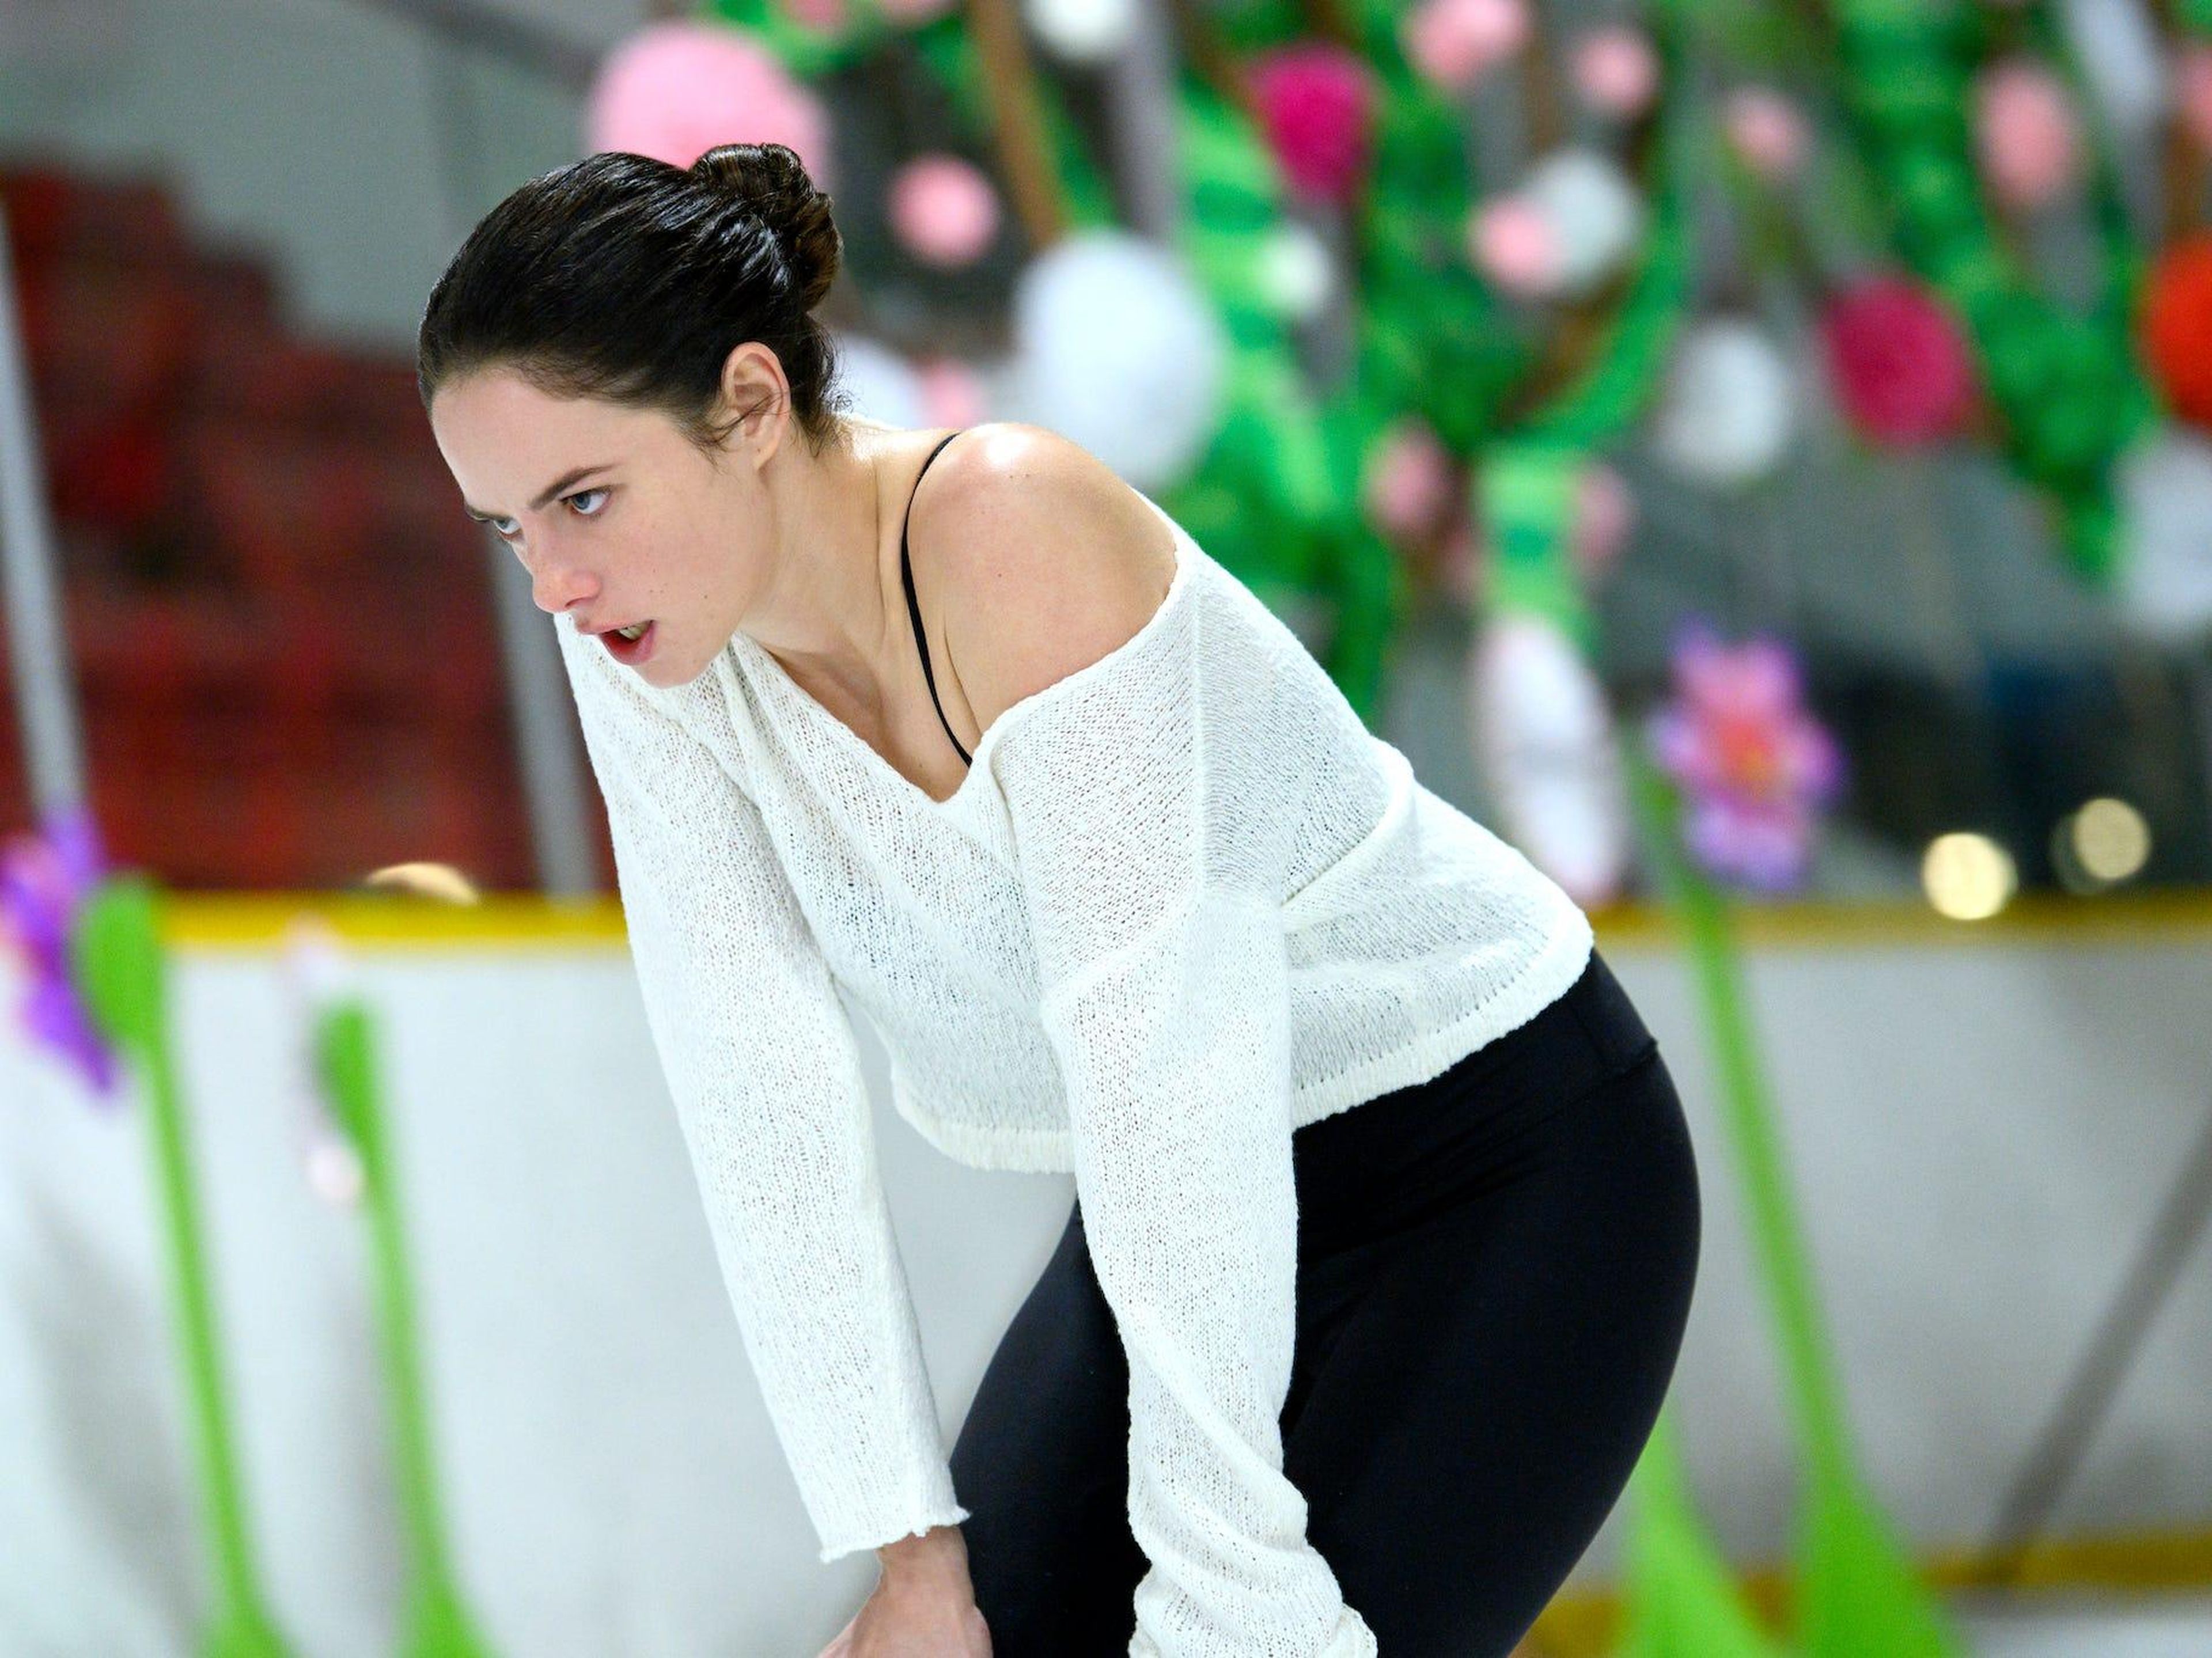 Kaya Scodelario protagoniza la serie dramática de Netflix "Spinning Out".